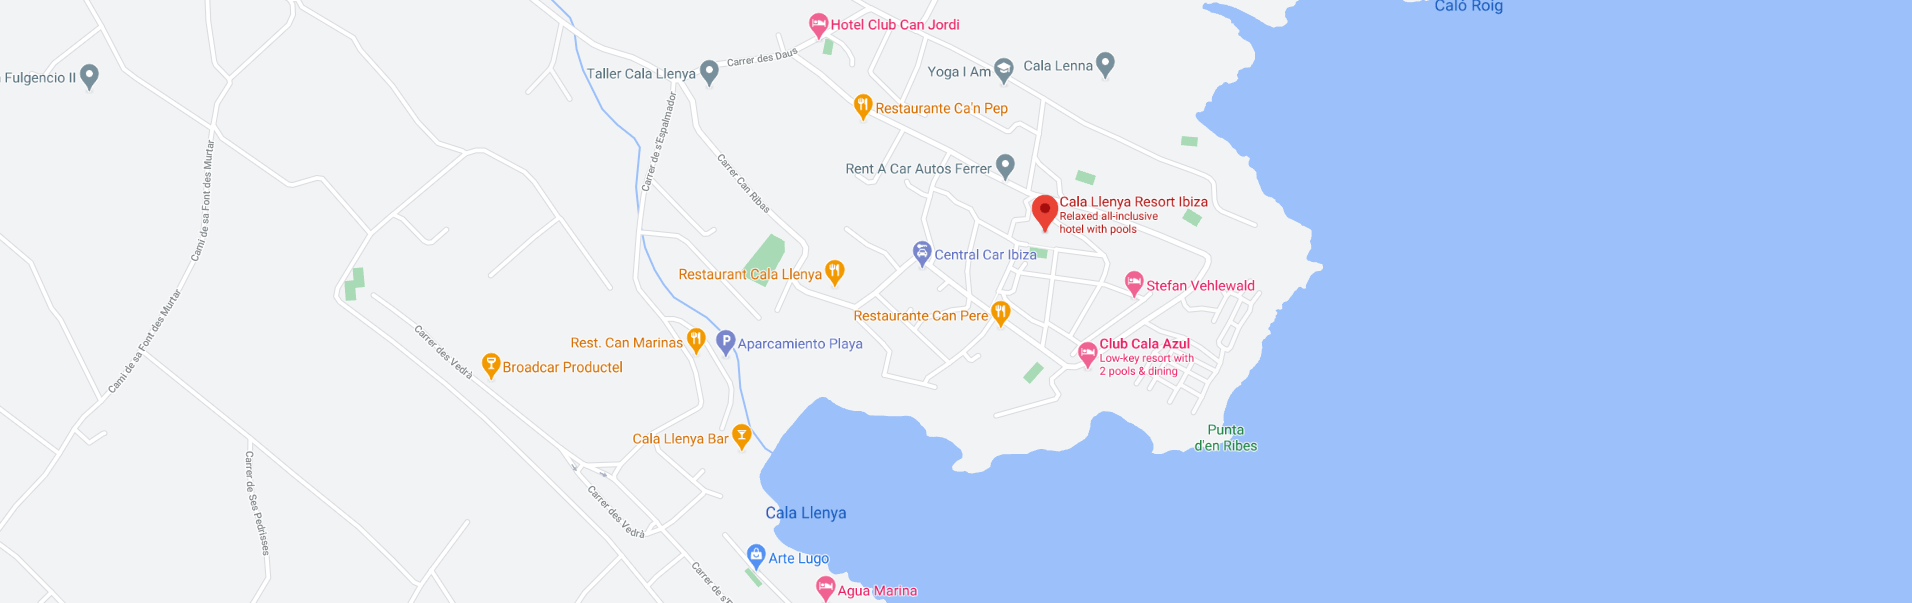 map from Cala Llenya